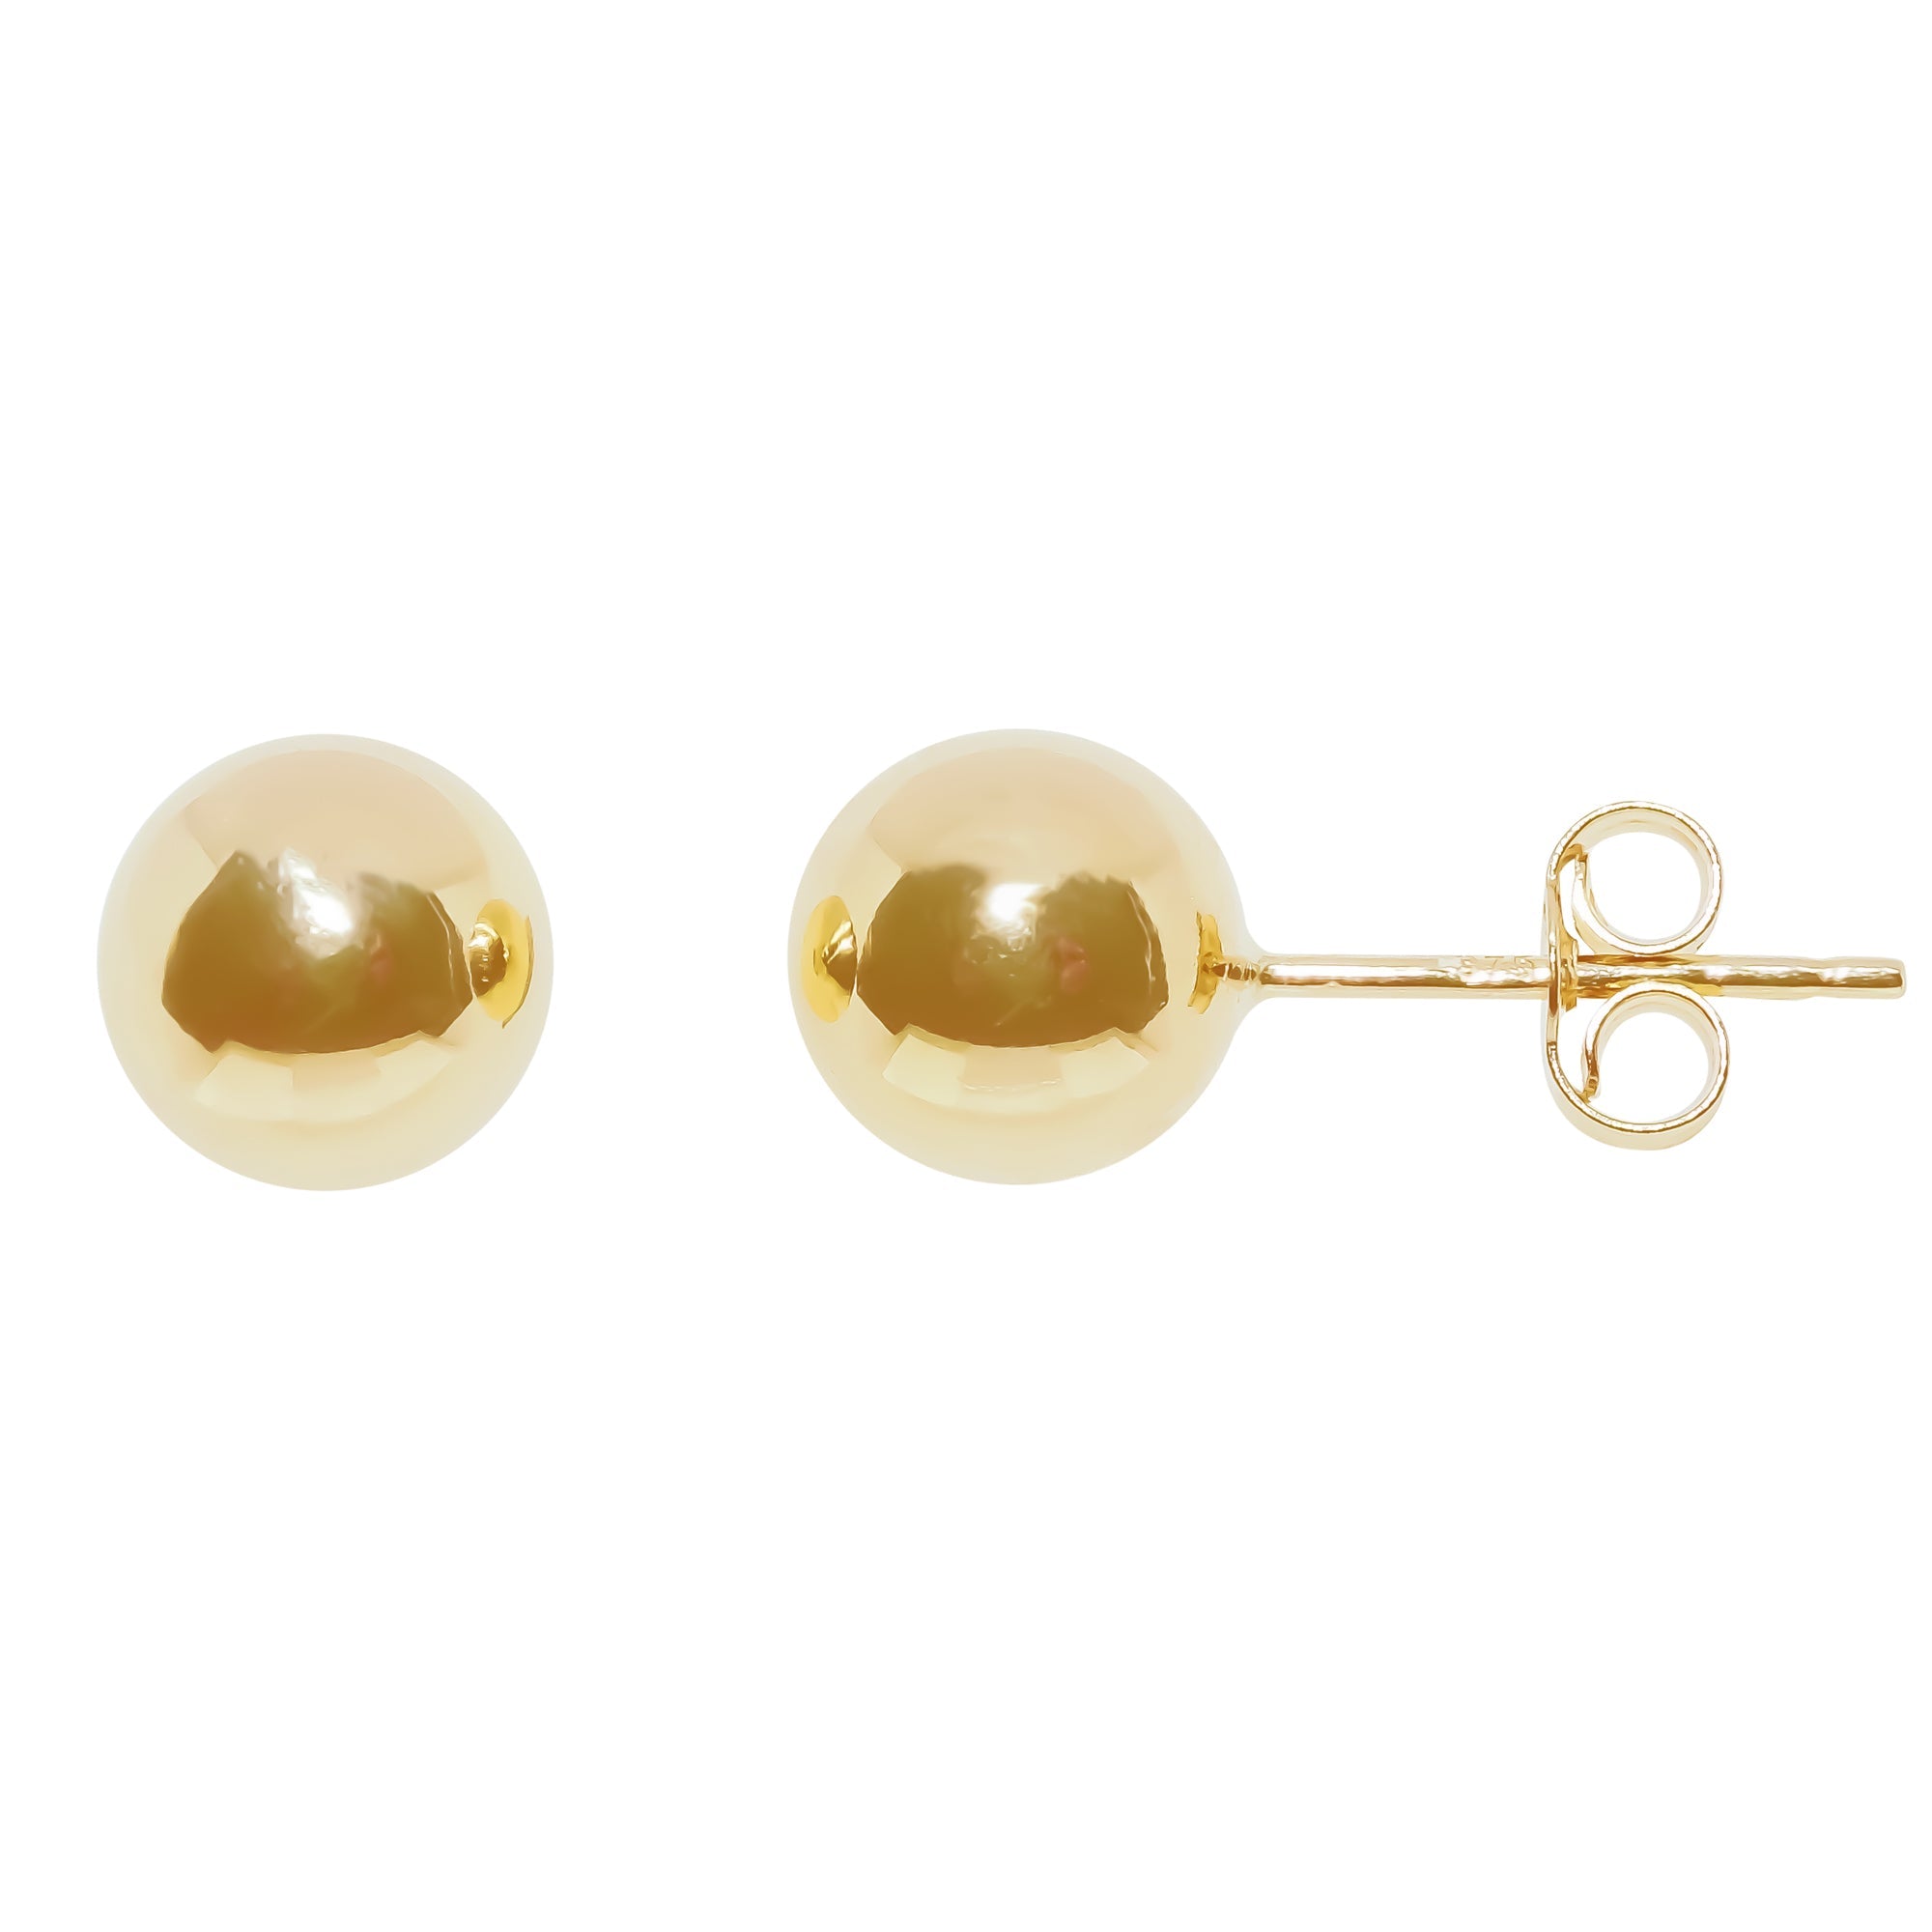 9ct gold 7mm ball stud earrings